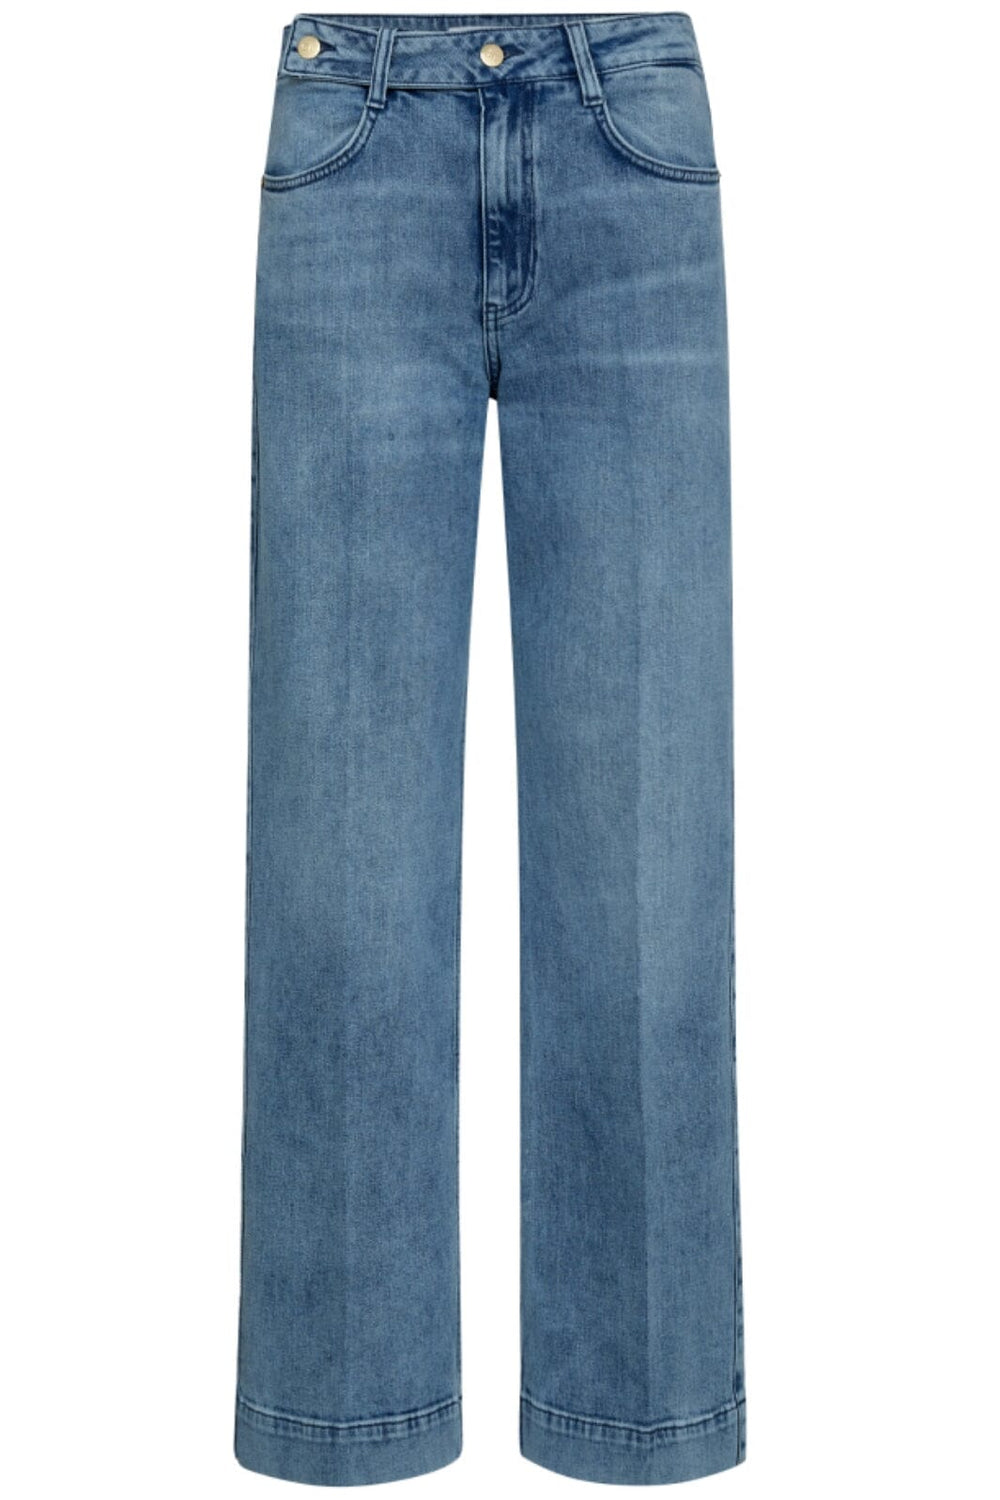 Co´couture - Joliecc 70 Bleach Jeans 31271 - 544 Used Denim Bukser 